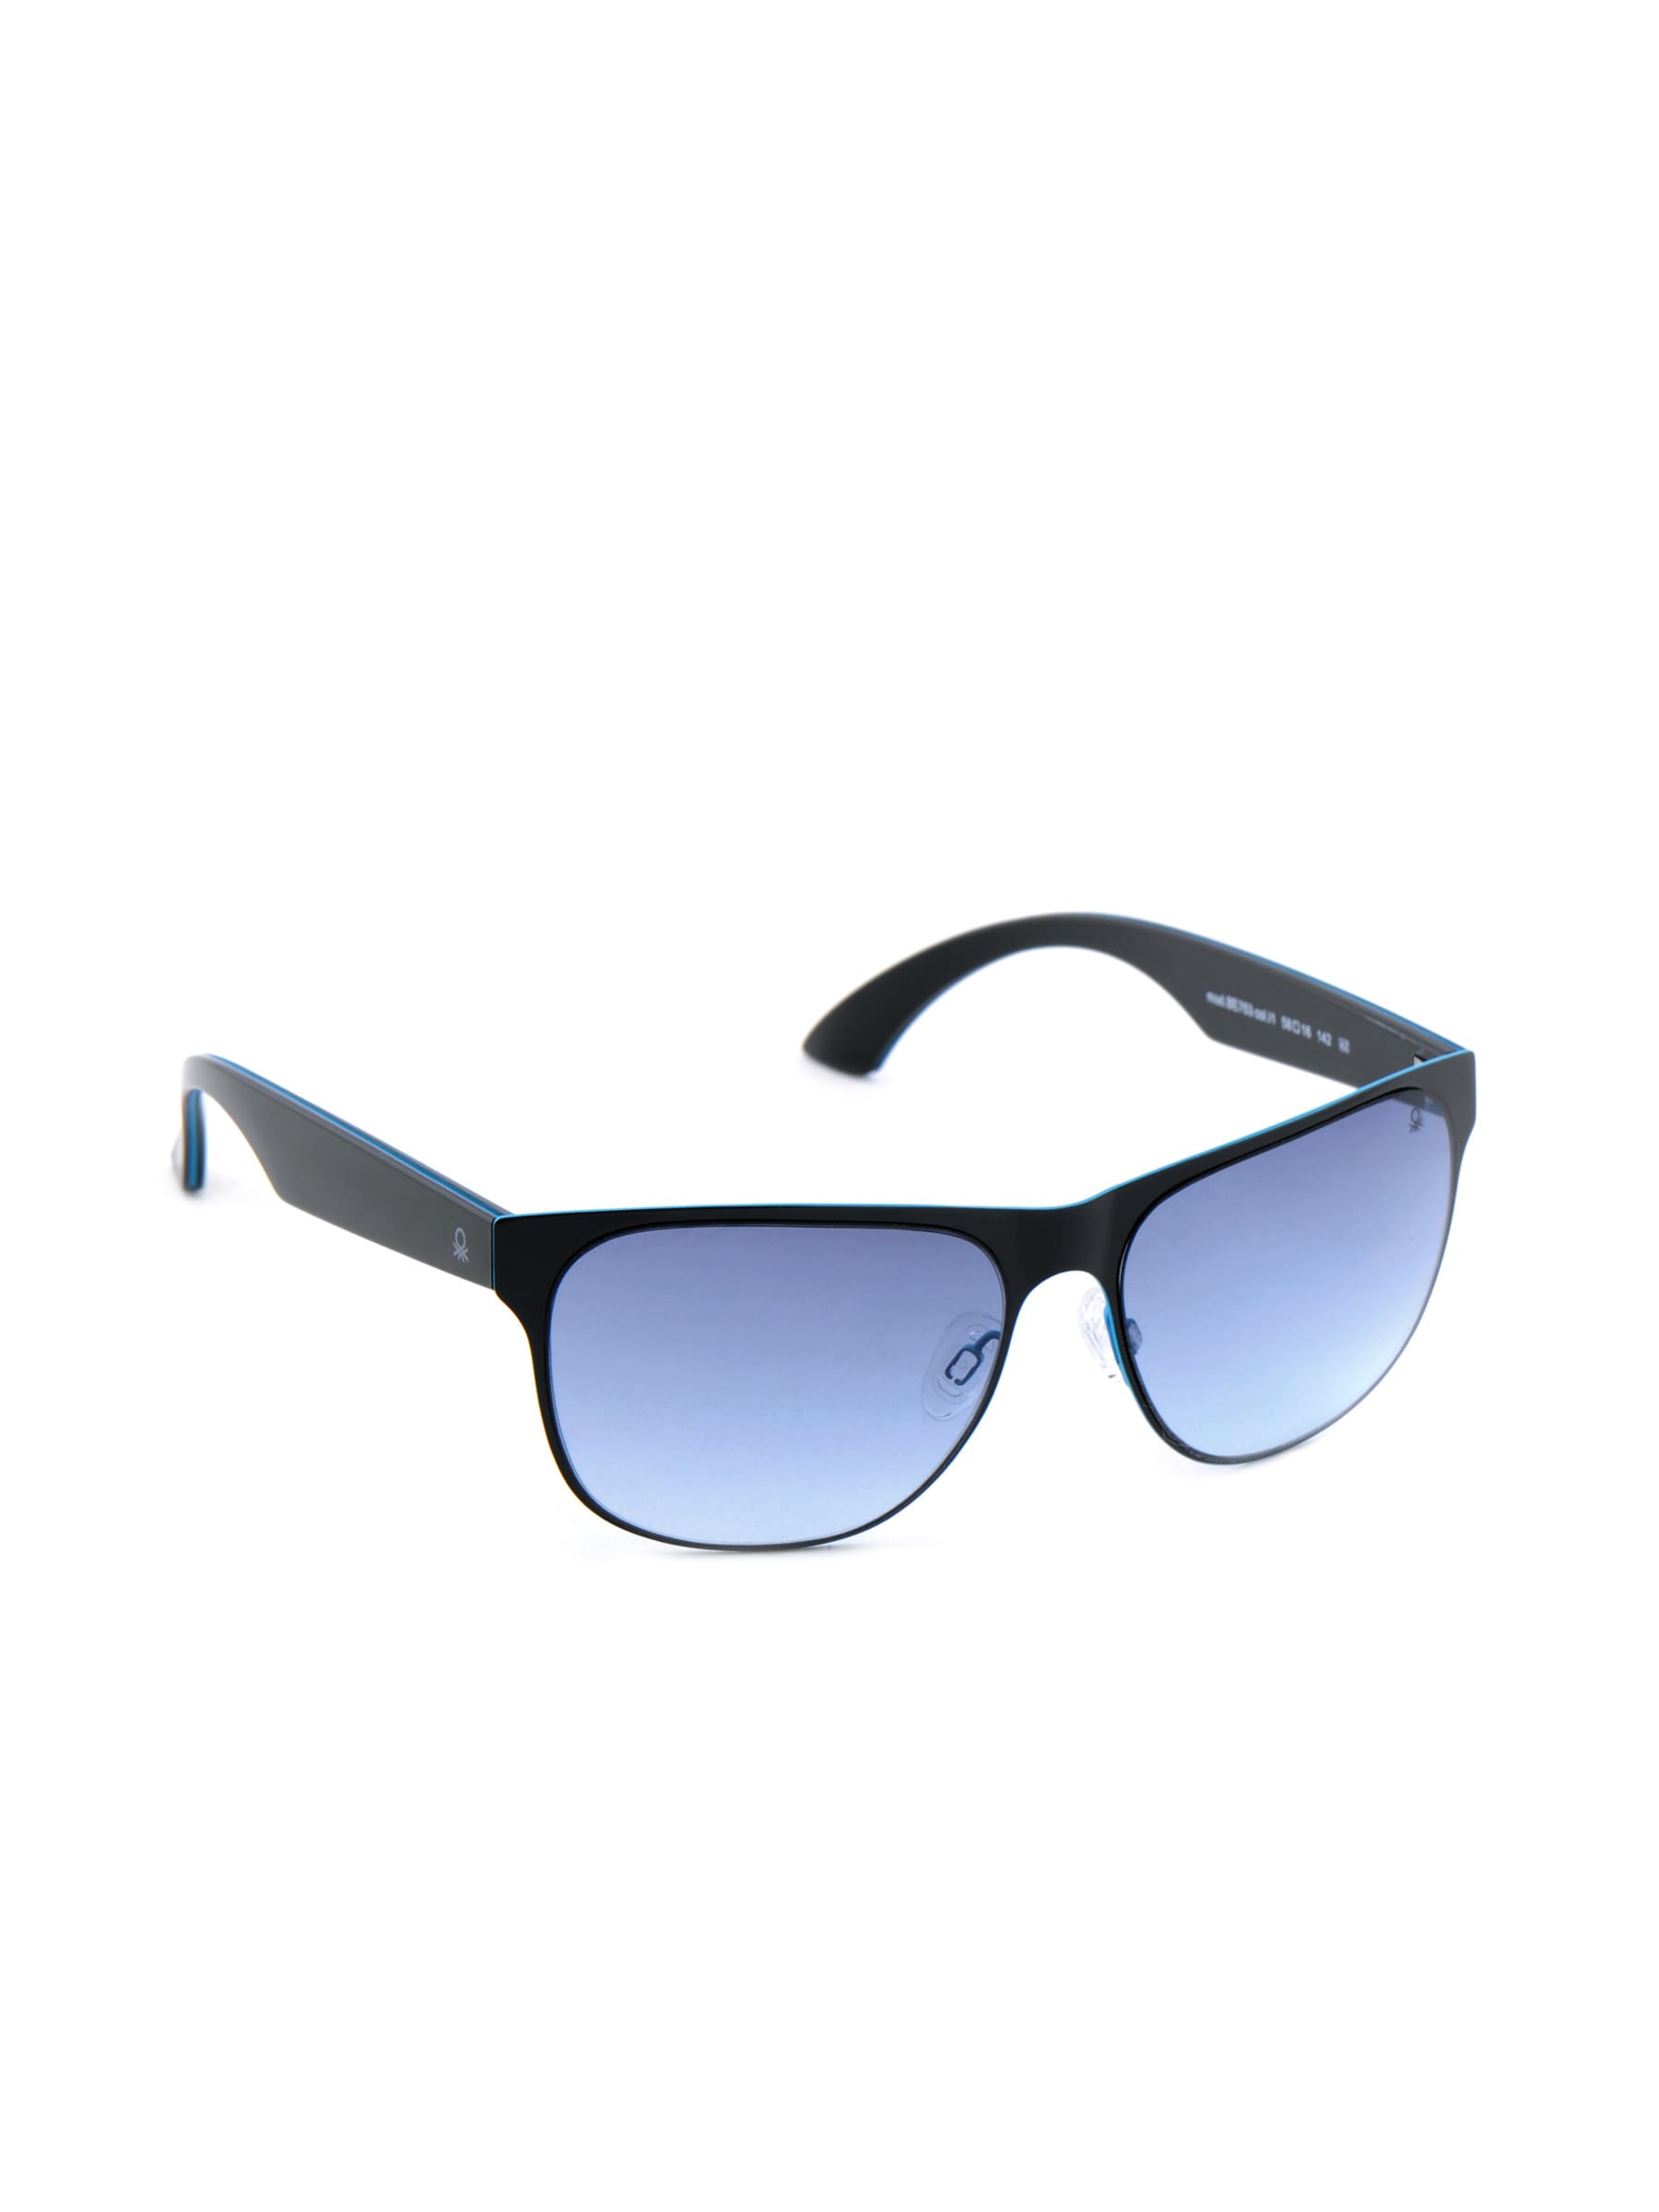 United Colors of Benetton Women Funky Eyewear Blue Sunglasses